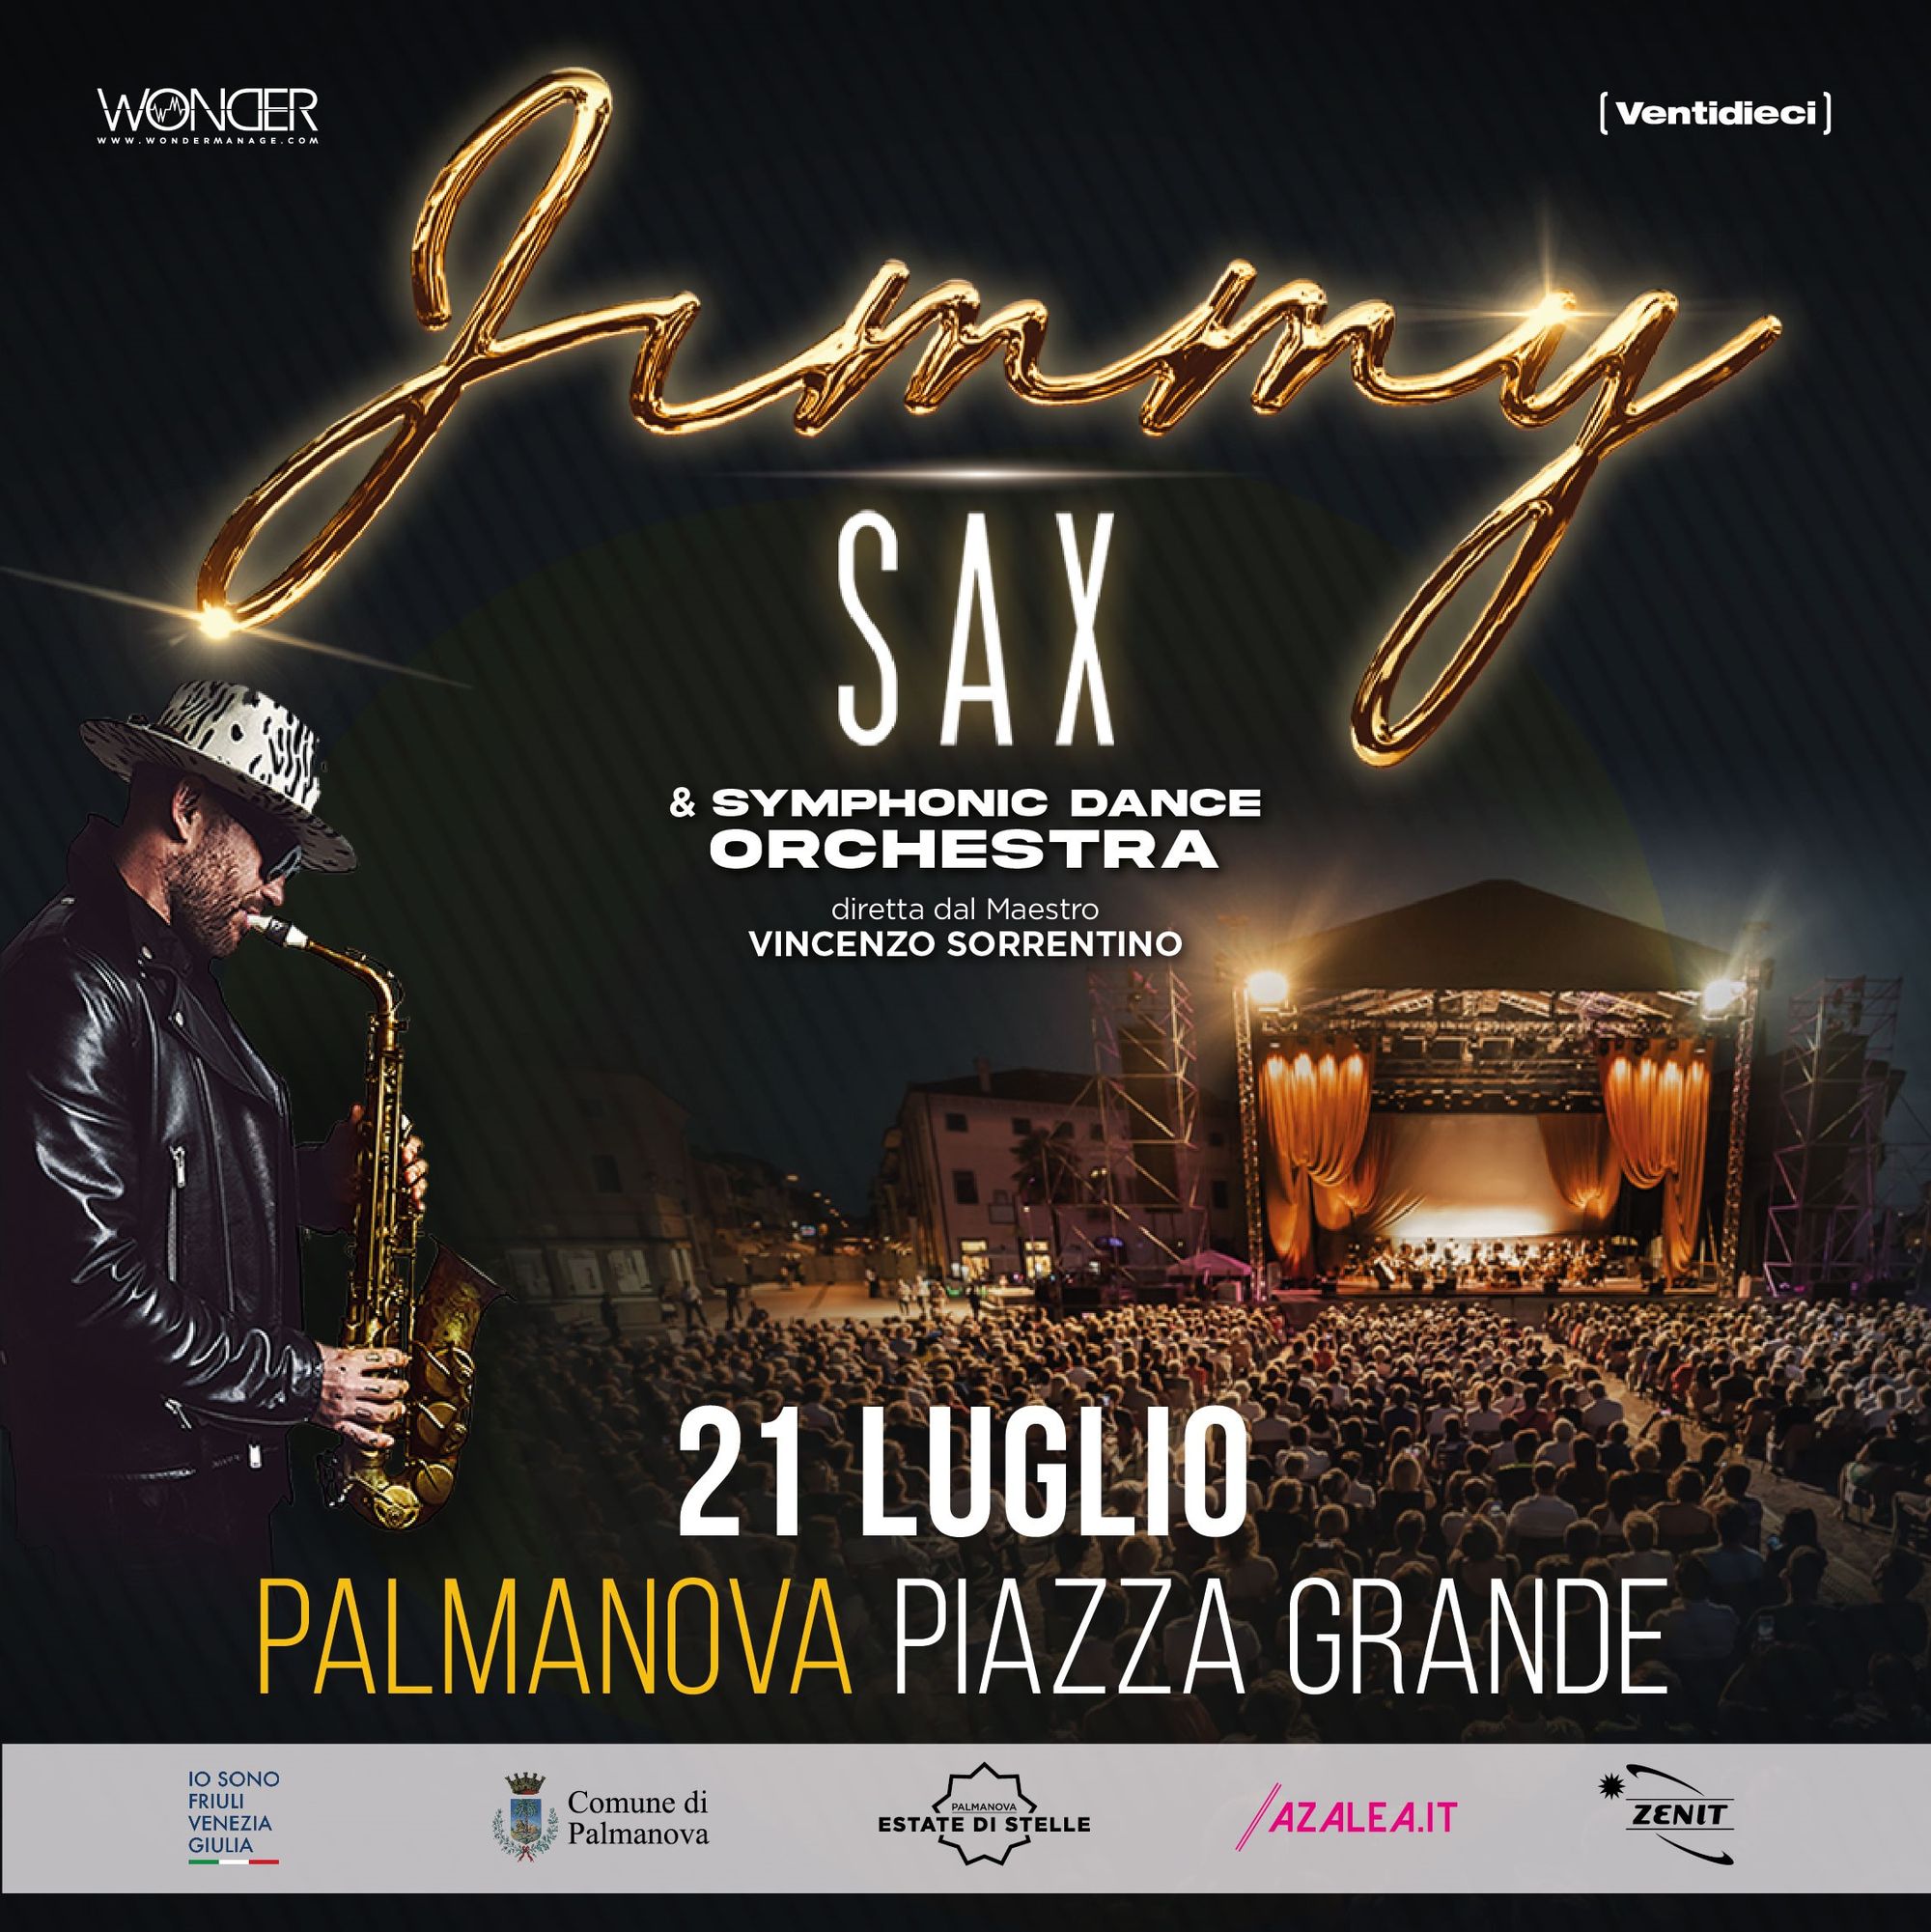 JIMMY SAX & SYMPHONIC DANCE ORCHESTRA 21 lug. “ESTATE DI STELLE” - PALMANOVA (Udine)